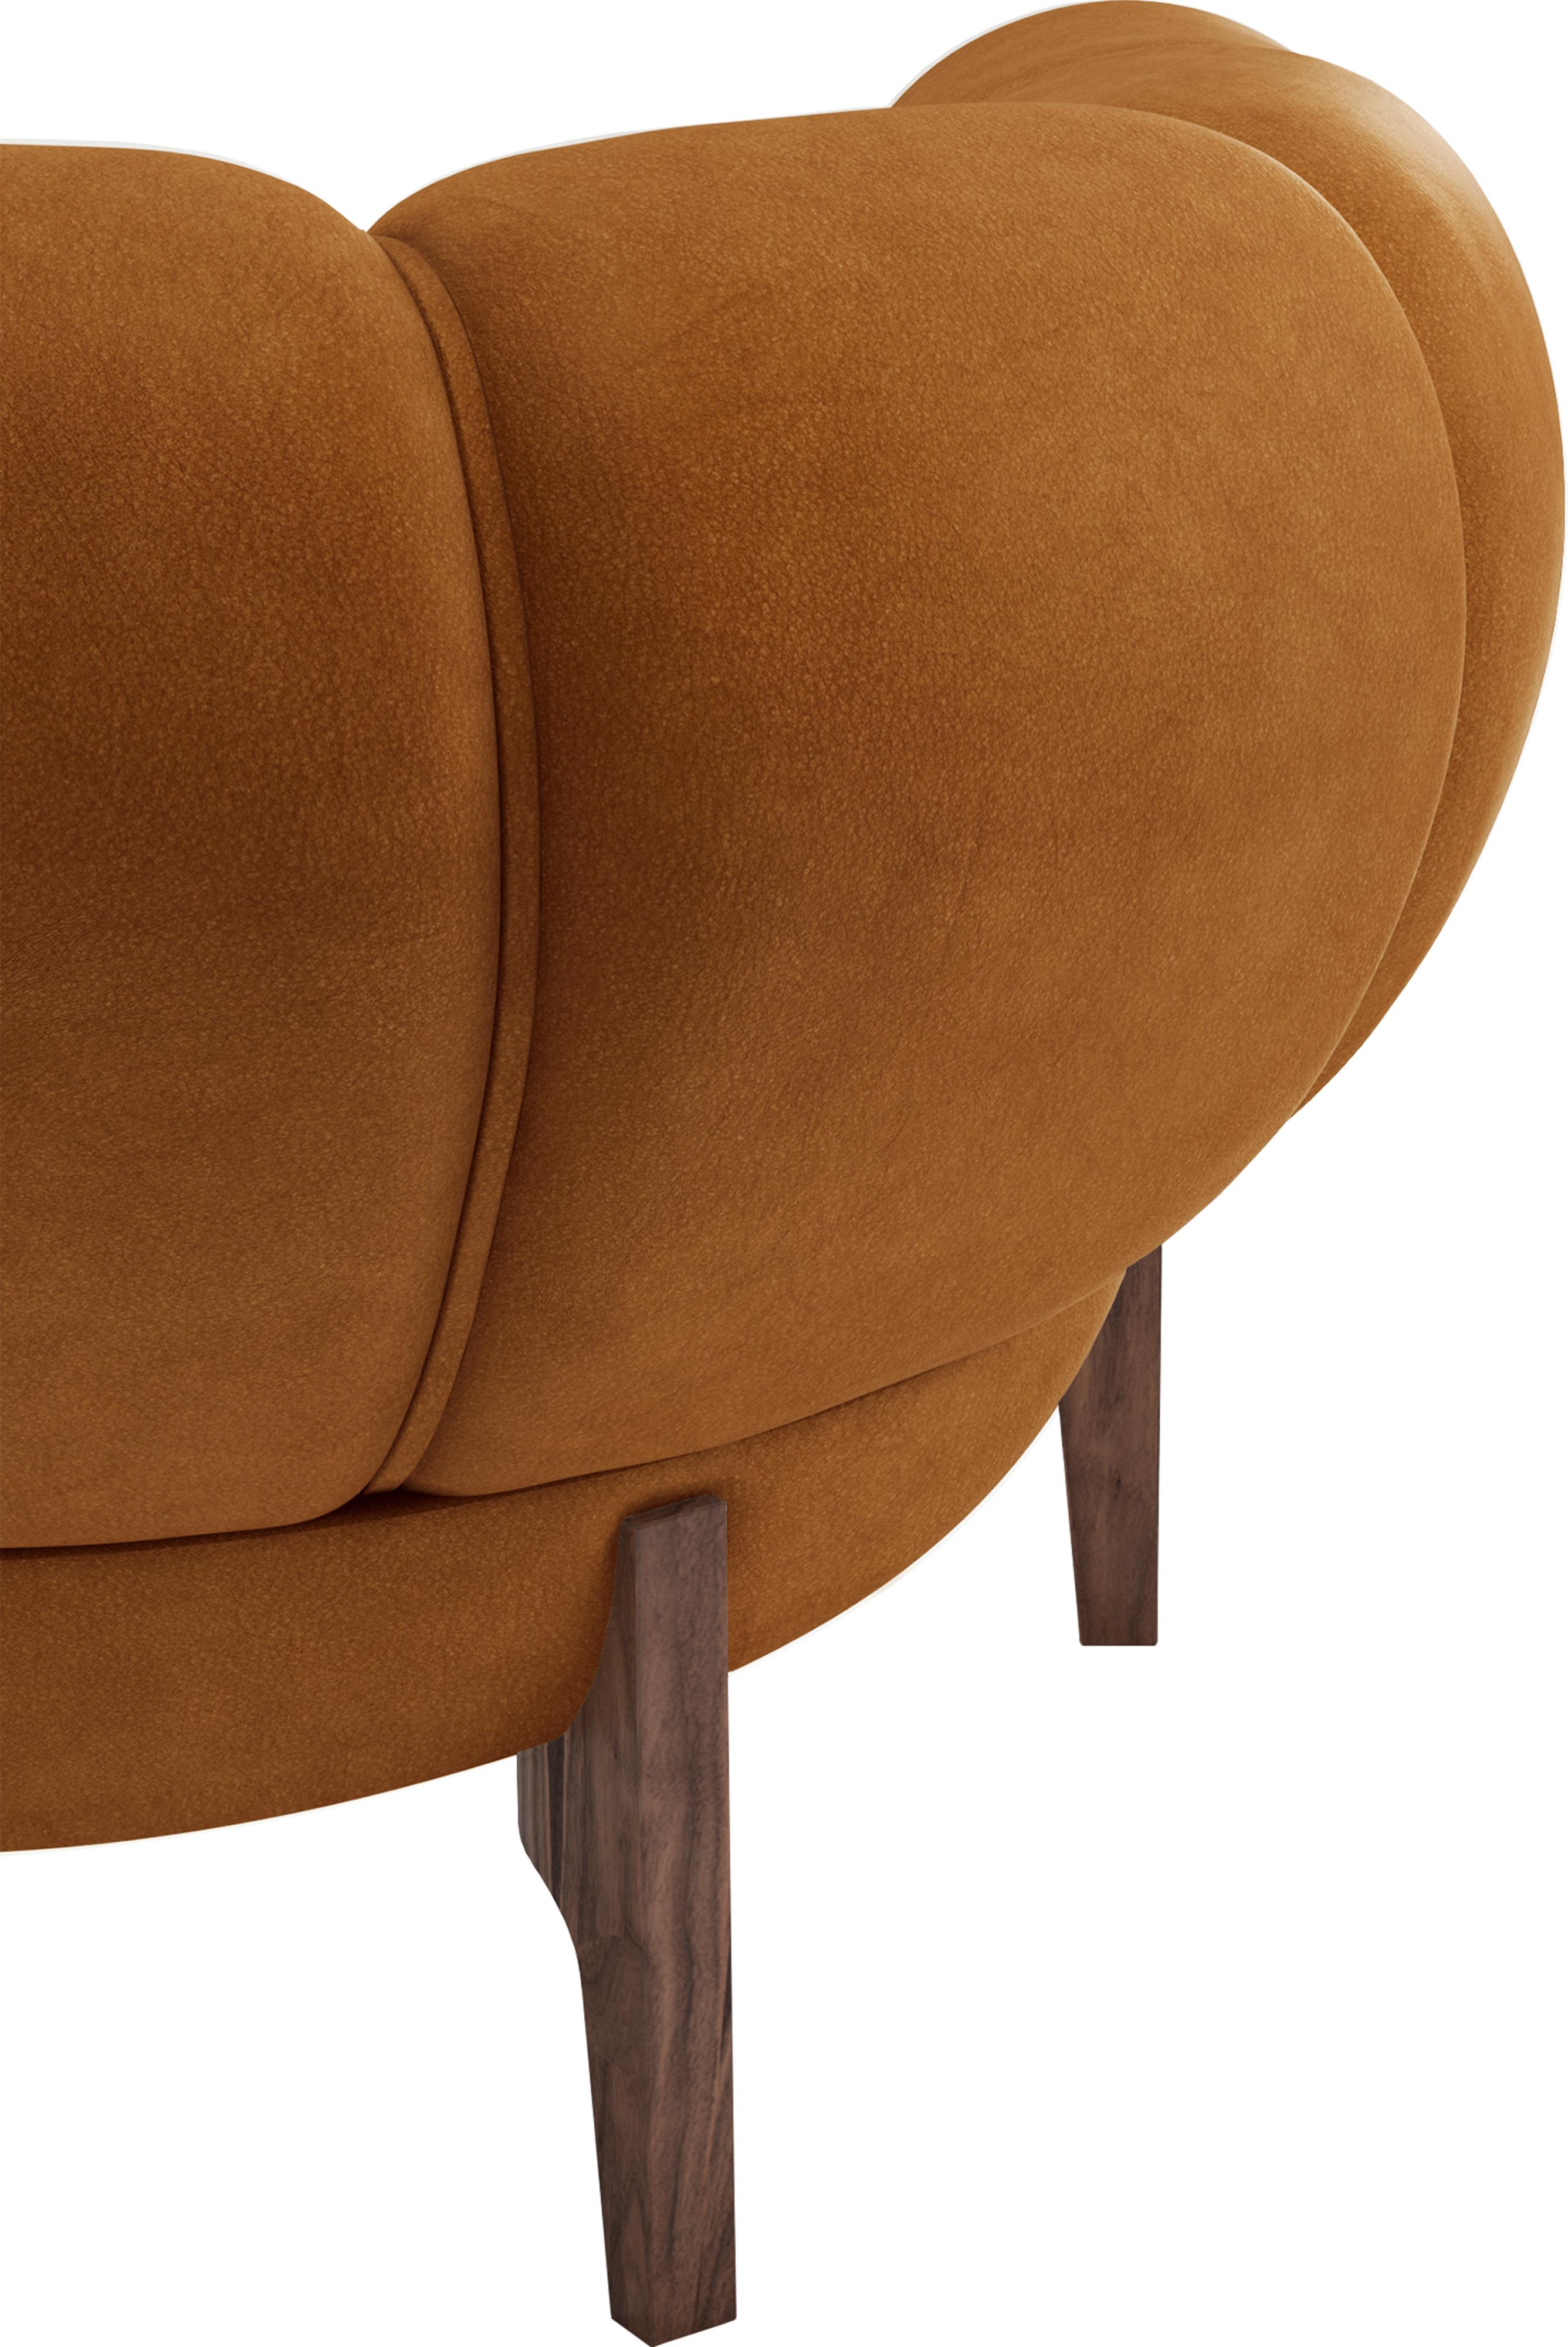 Leather 'Croissant' Sofa by Illum Wikkelsø for Gubi with Oak Legs For Sale 6